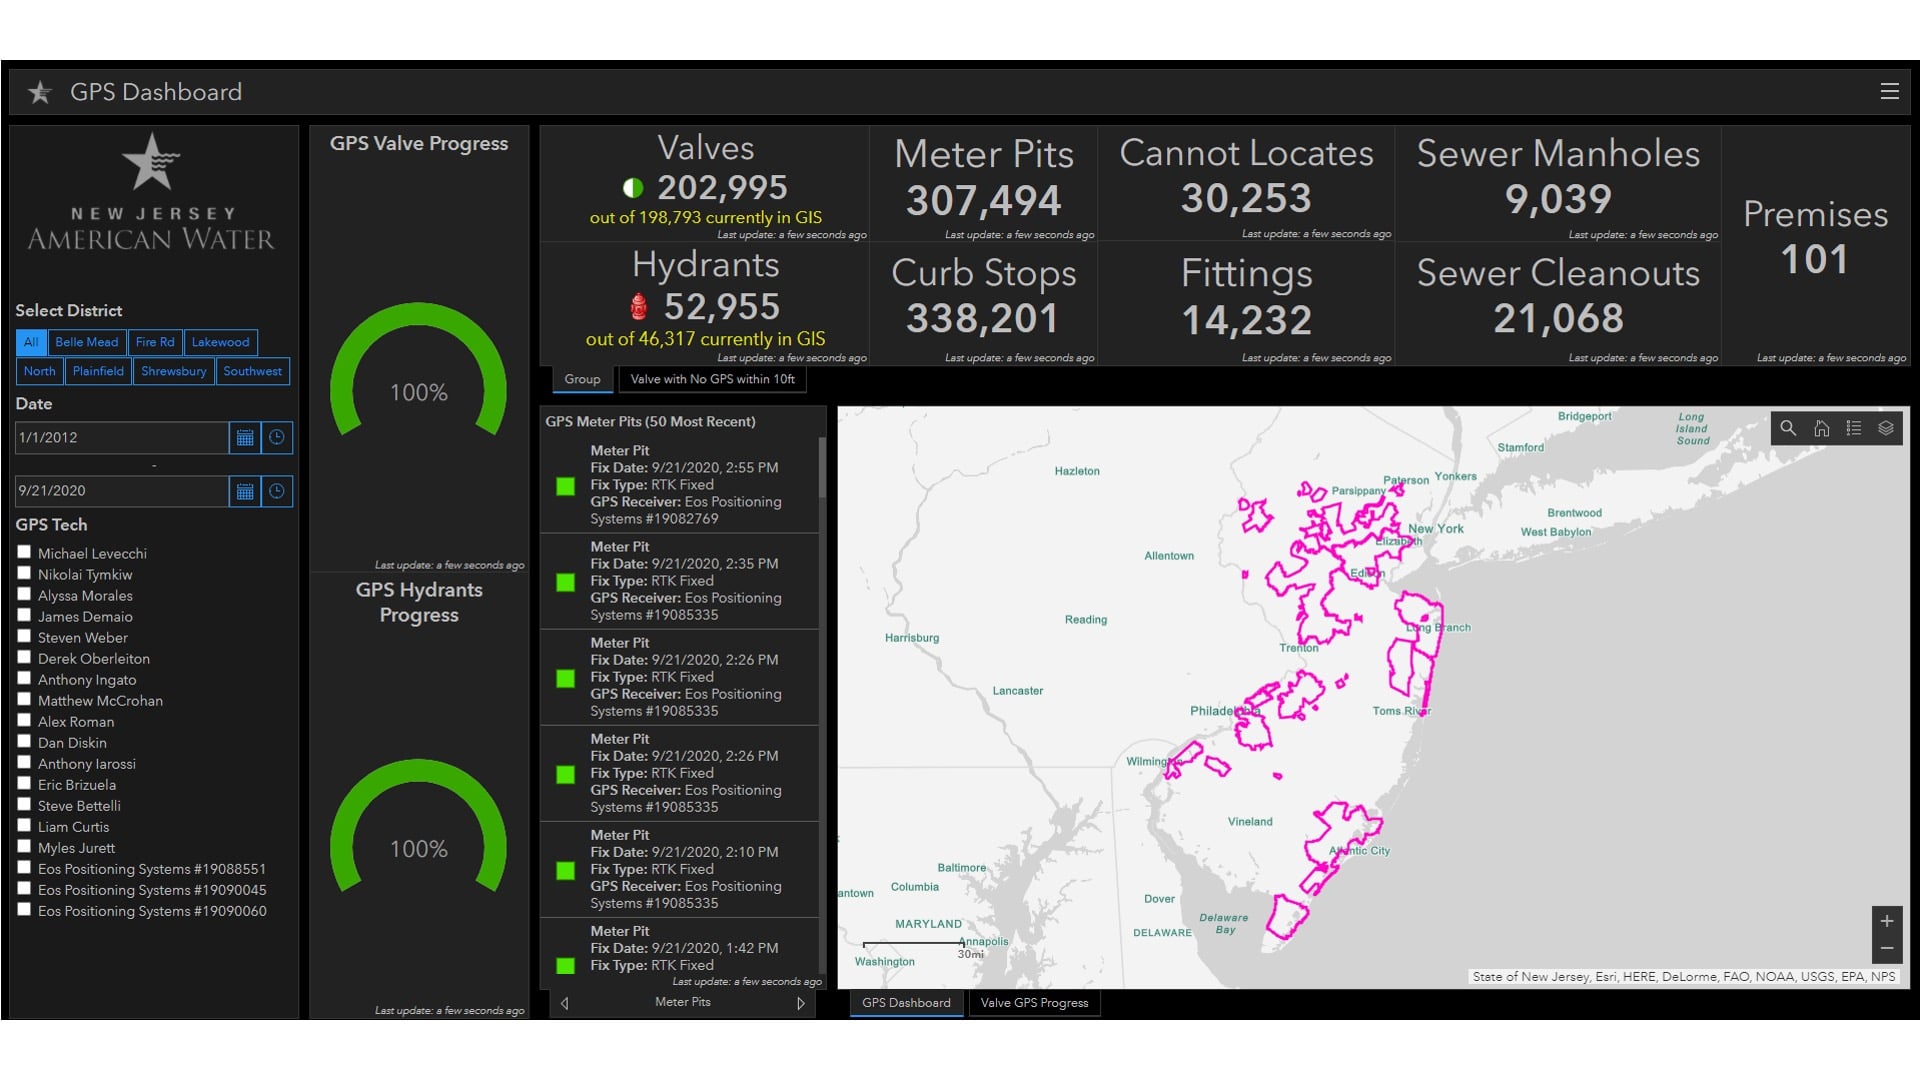 American Water Esri UC Presentation: Visualizing Data in ArcGIS Dashboards with GPS Valve Progress